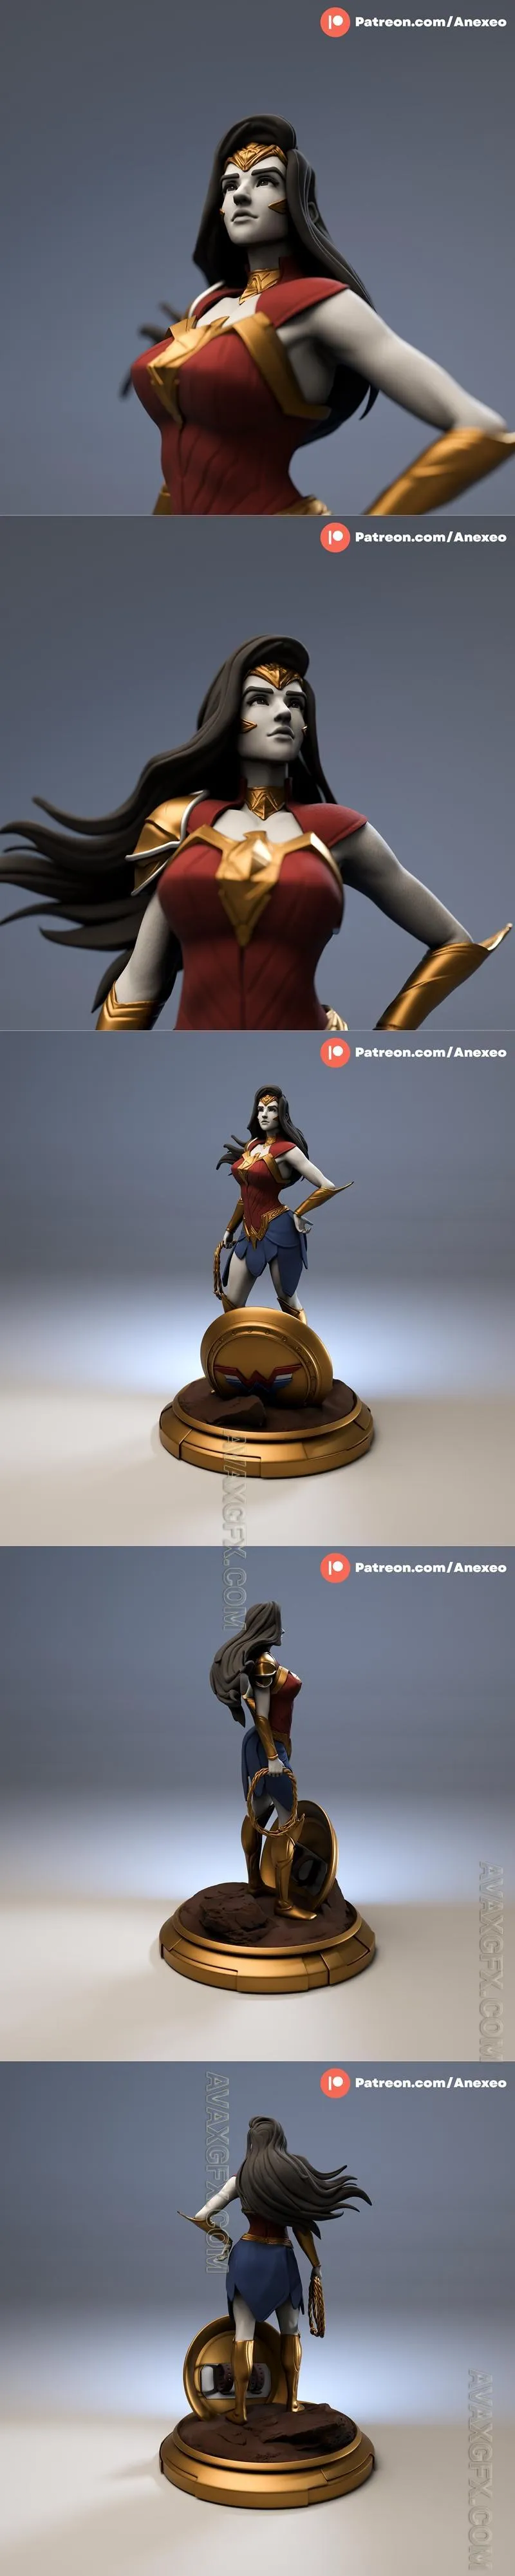 Anexeo's Forge - Wonder Woman - STL 3D Model